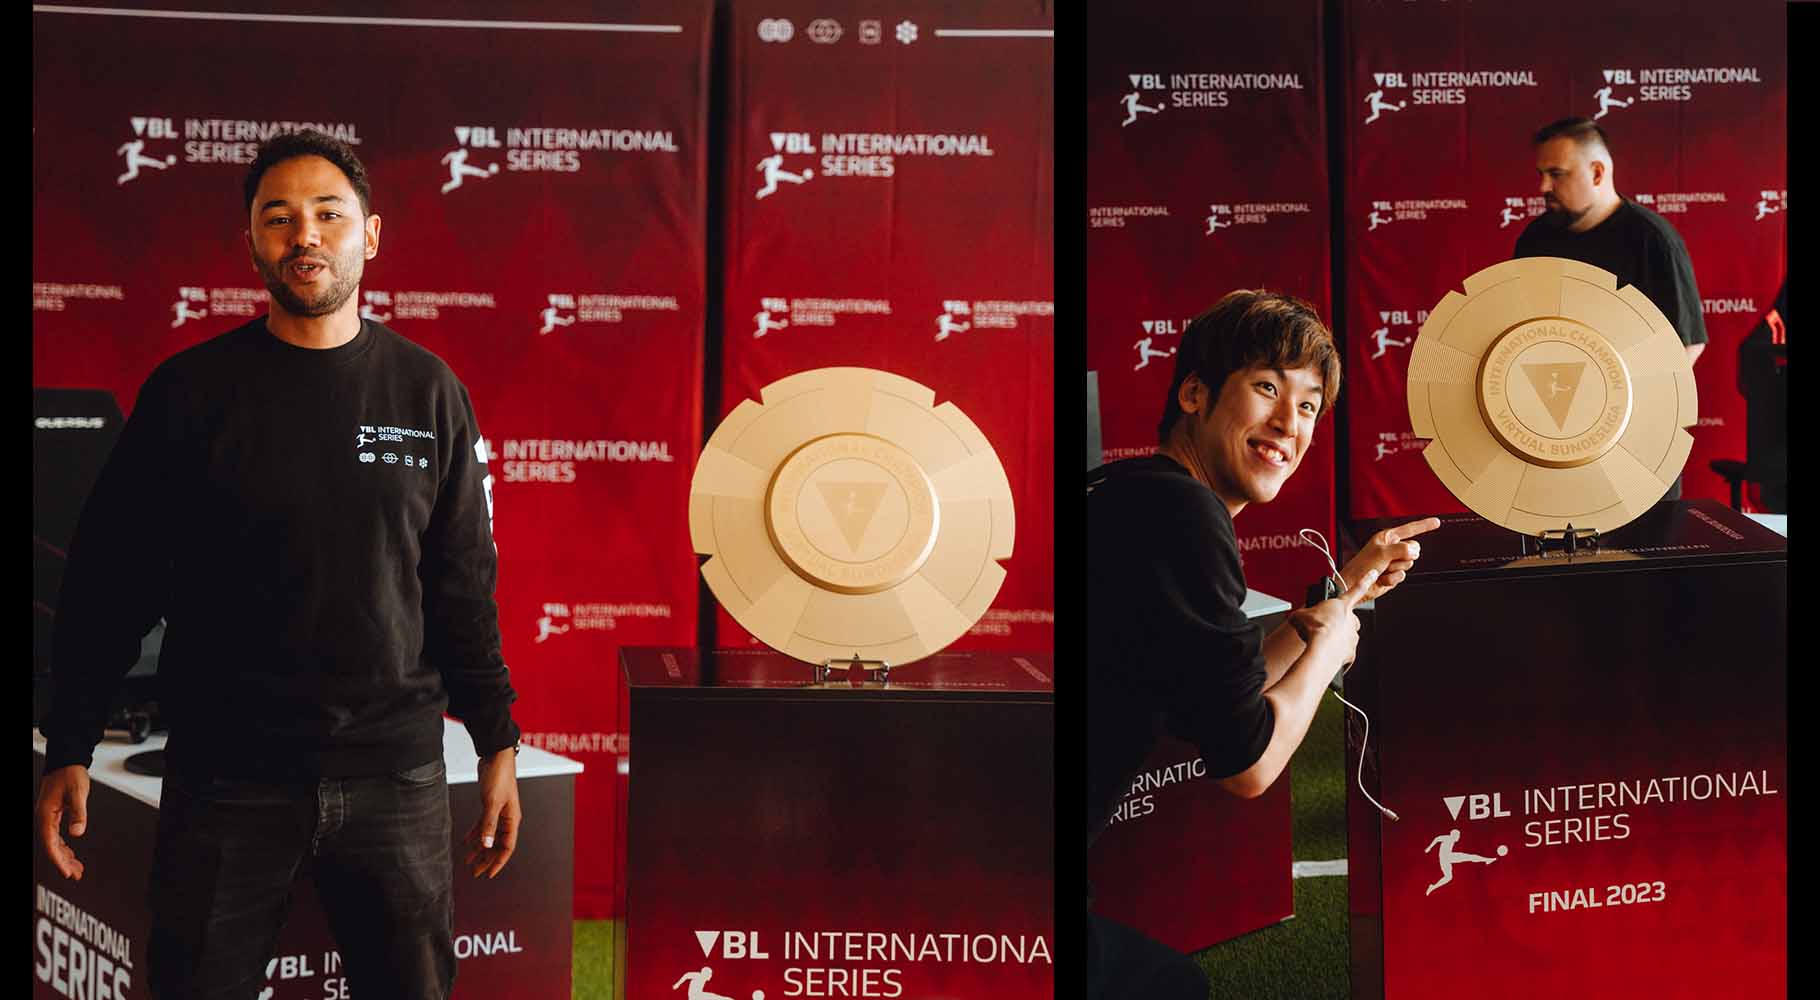 trophy podium "Bundesliga International Series"